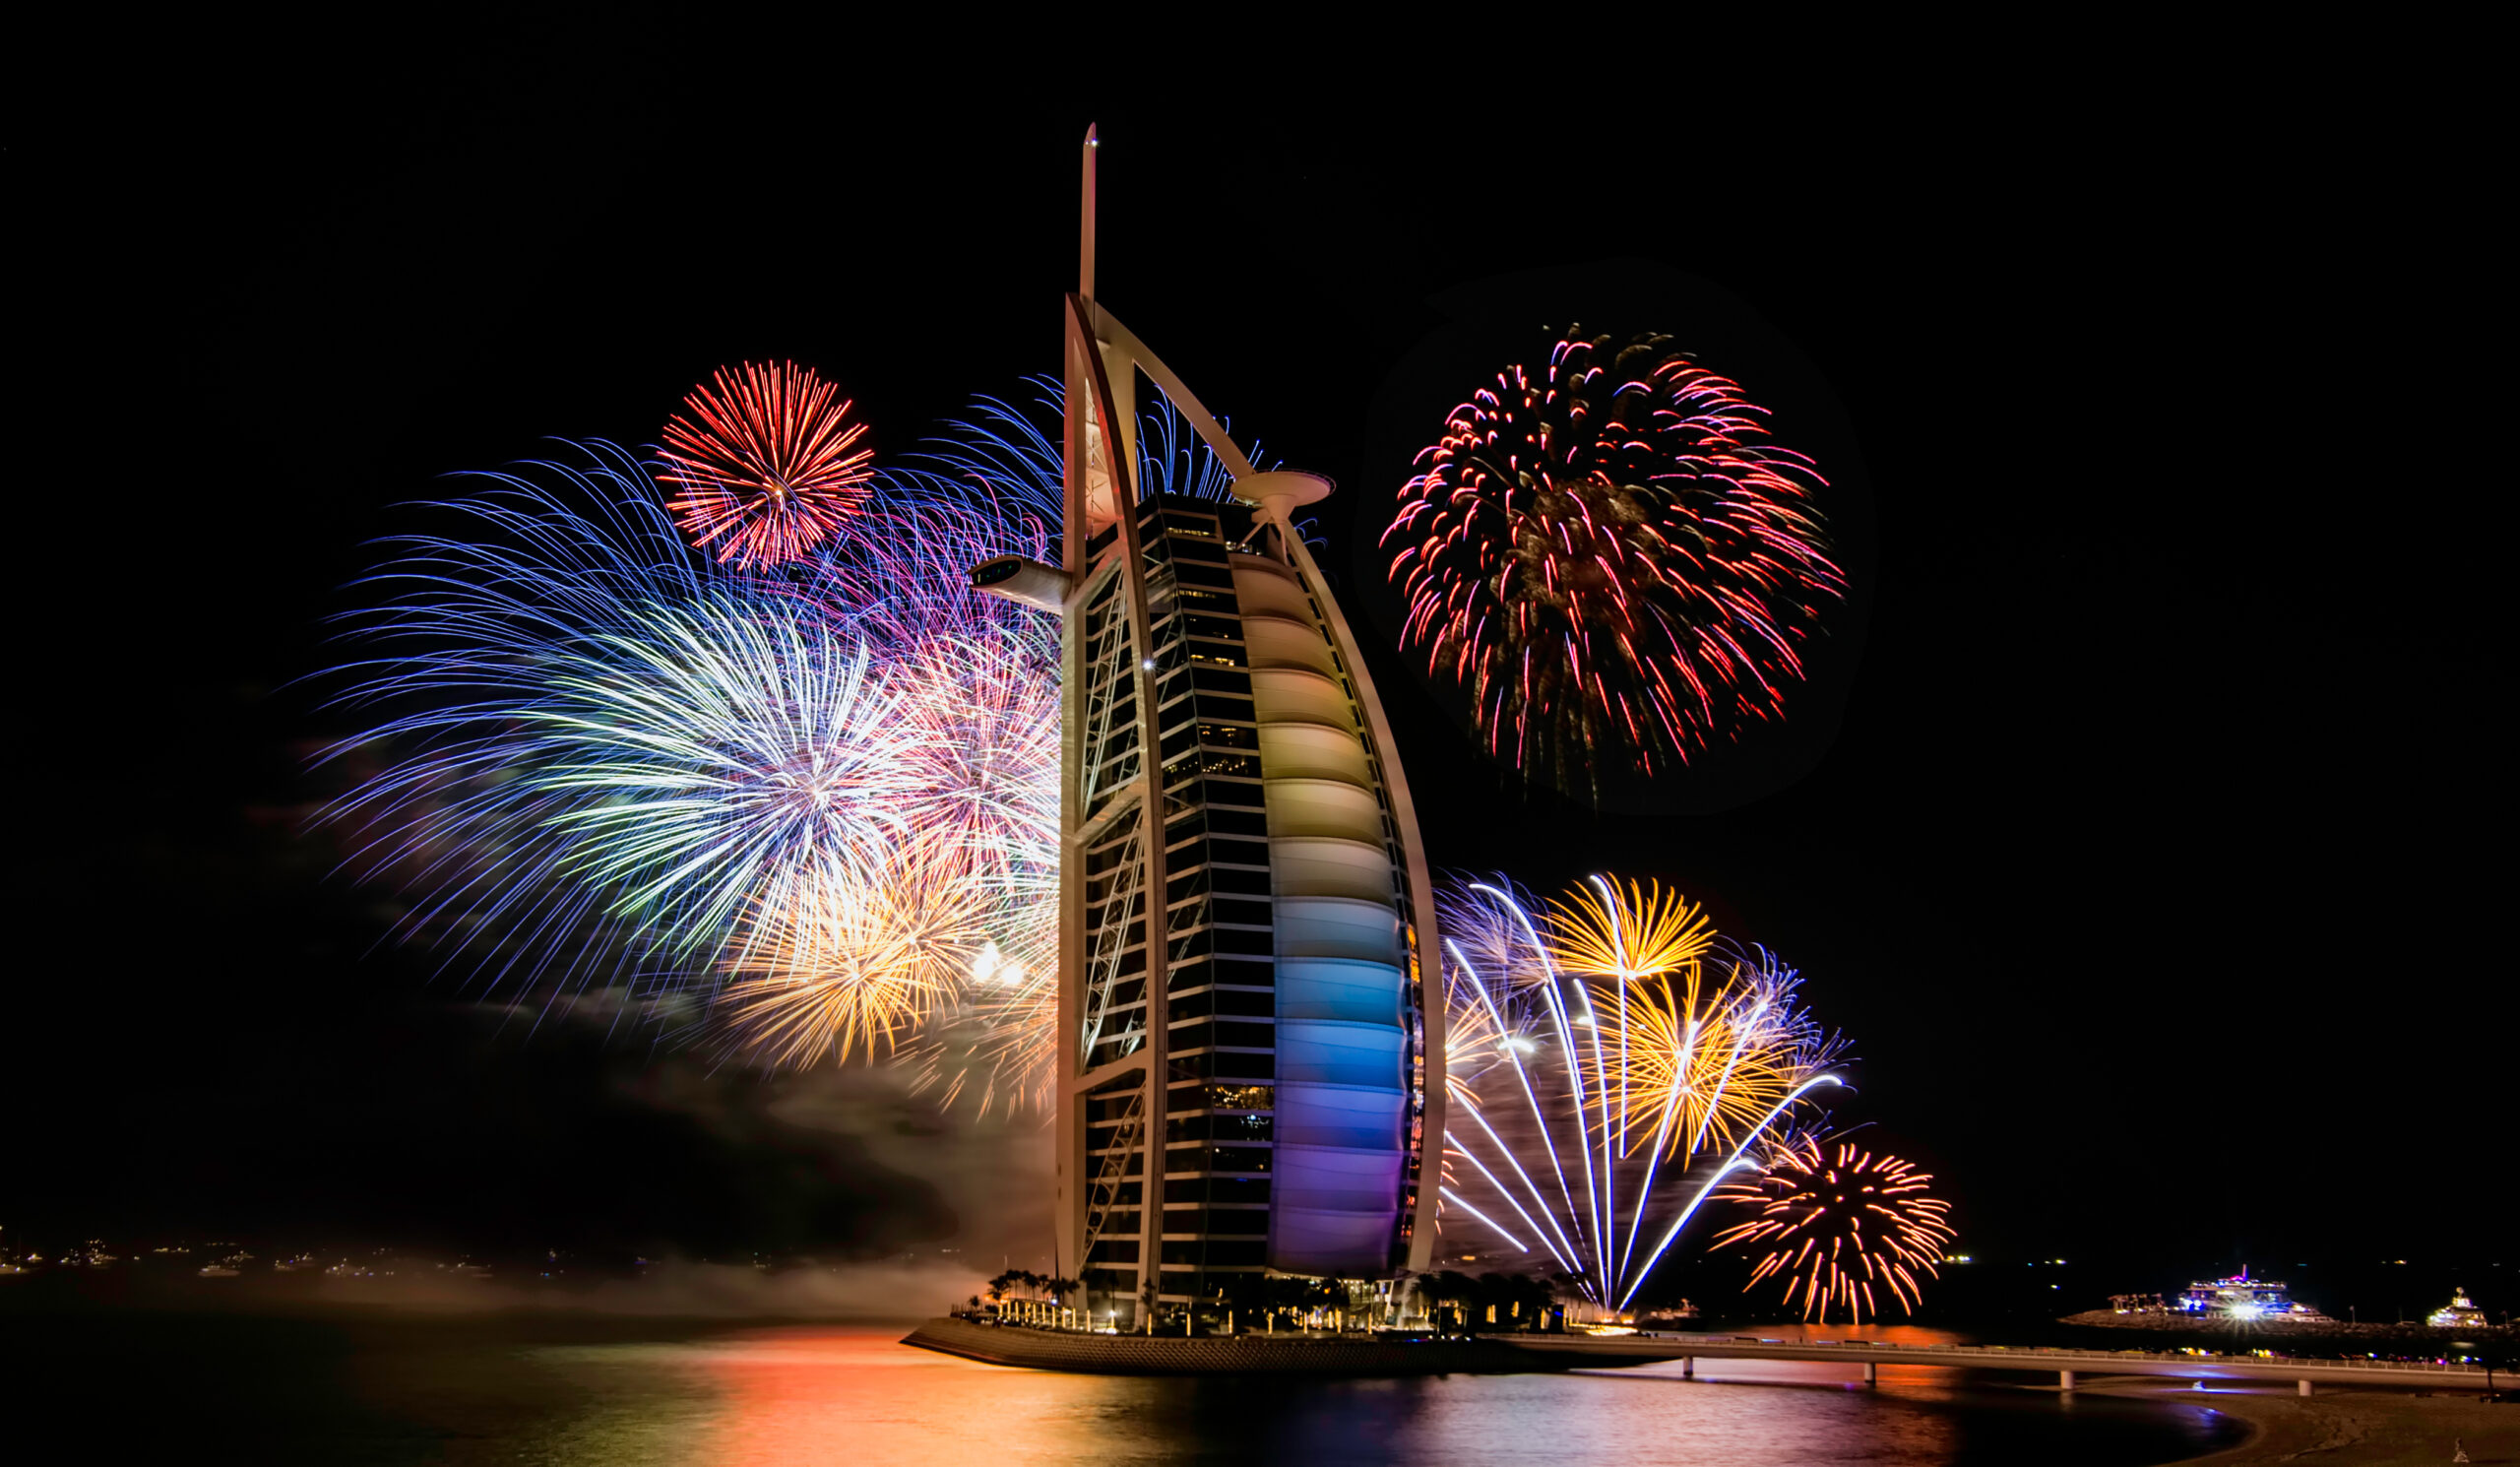 New Year in Dubai - Burj Al Arab fireworks